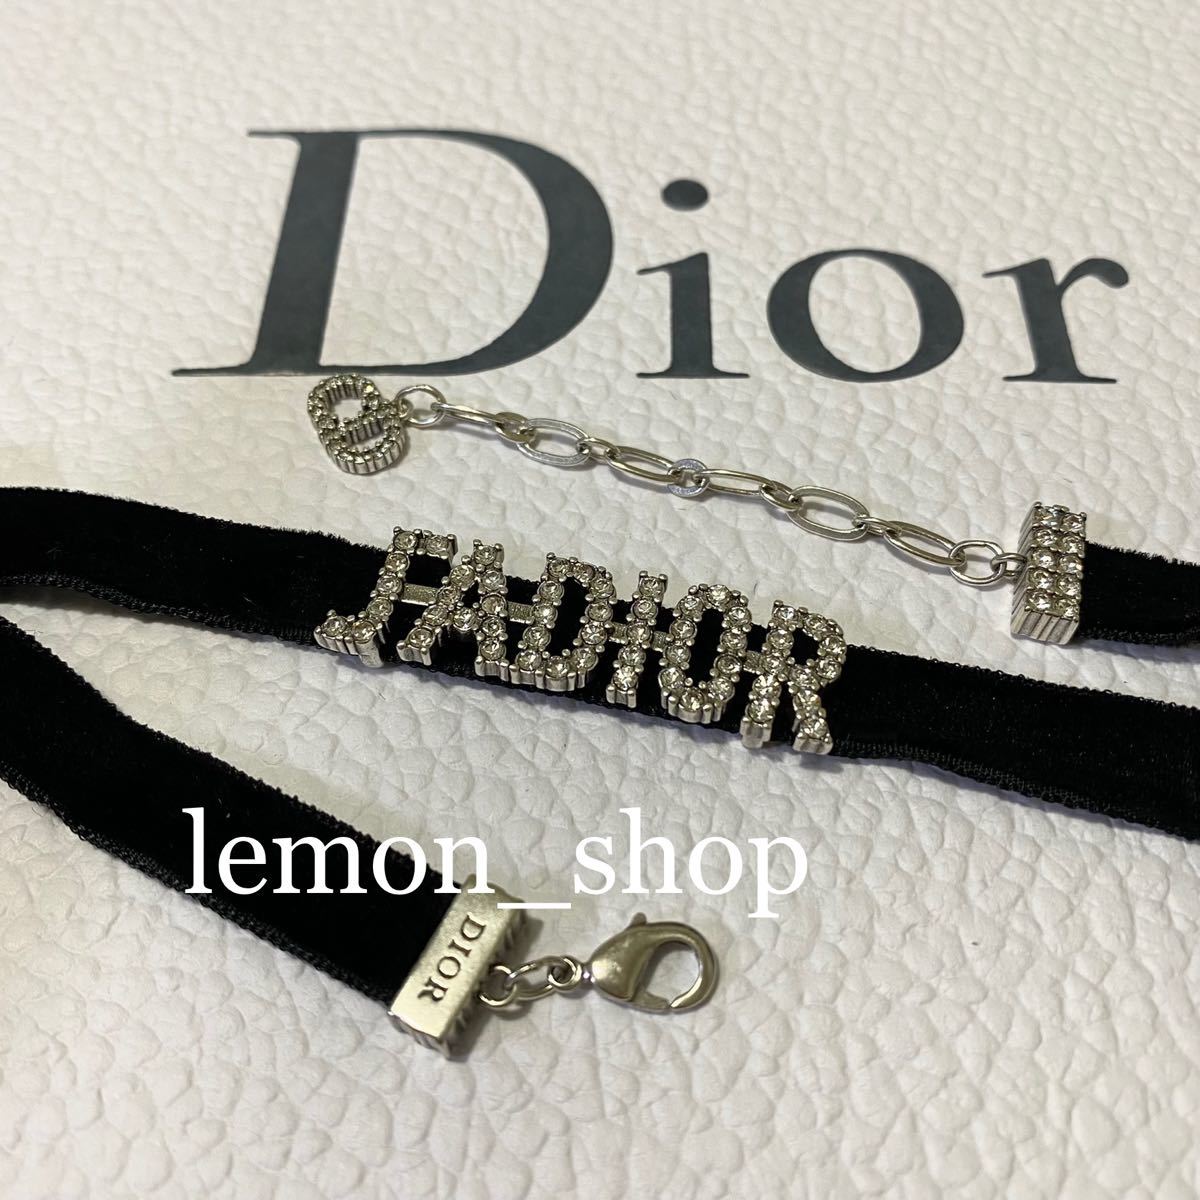 Dior チョーカー ネックレス clinicacampinas.com.br